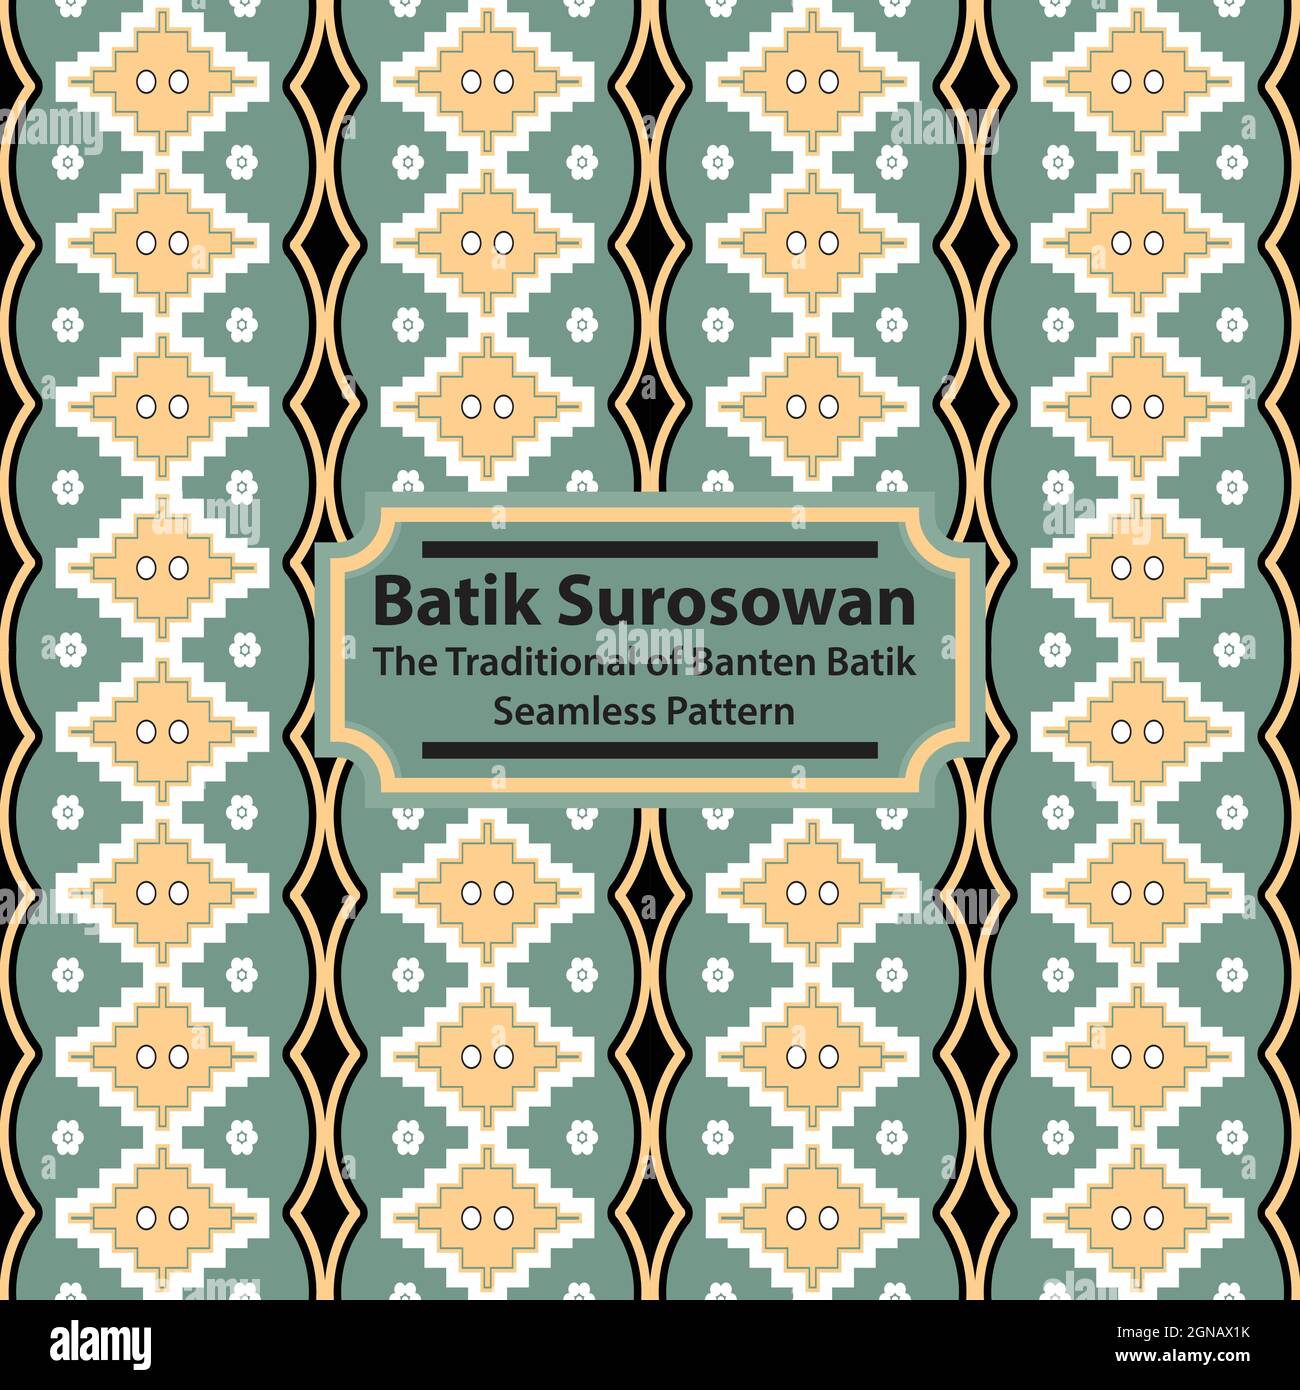 Batik Surosowan Banten - The Traditional of Banten Batik Seamless Pattern Stock Vector